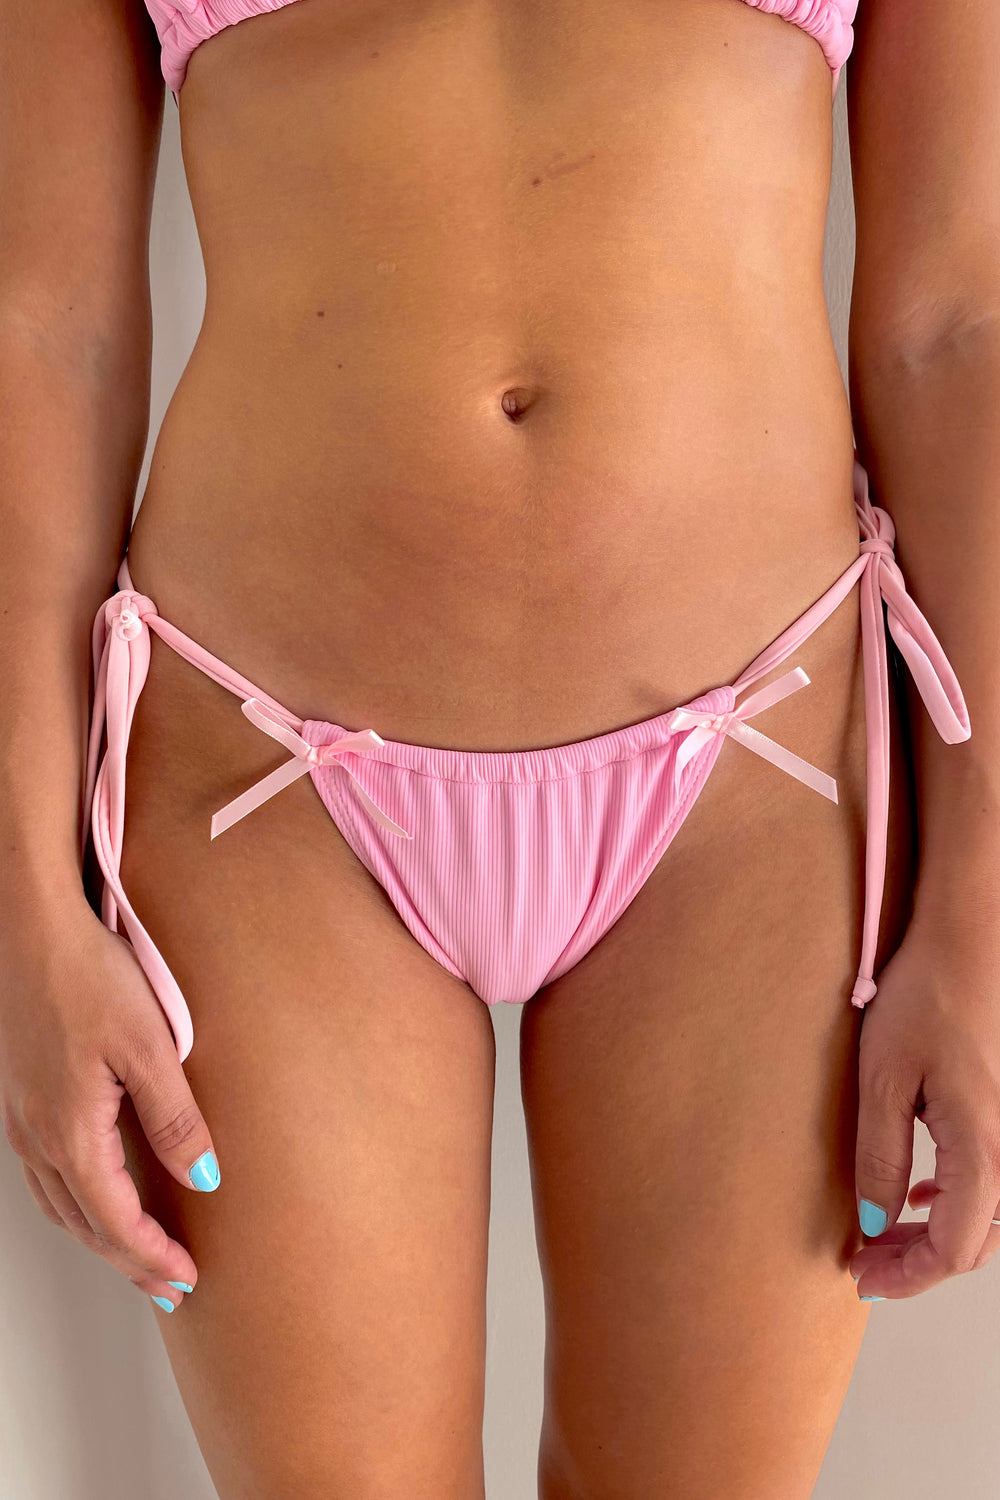 Buy Moon Bay Bikini Bottom - Order Bikini Bottom online 1124559600 - PINK US